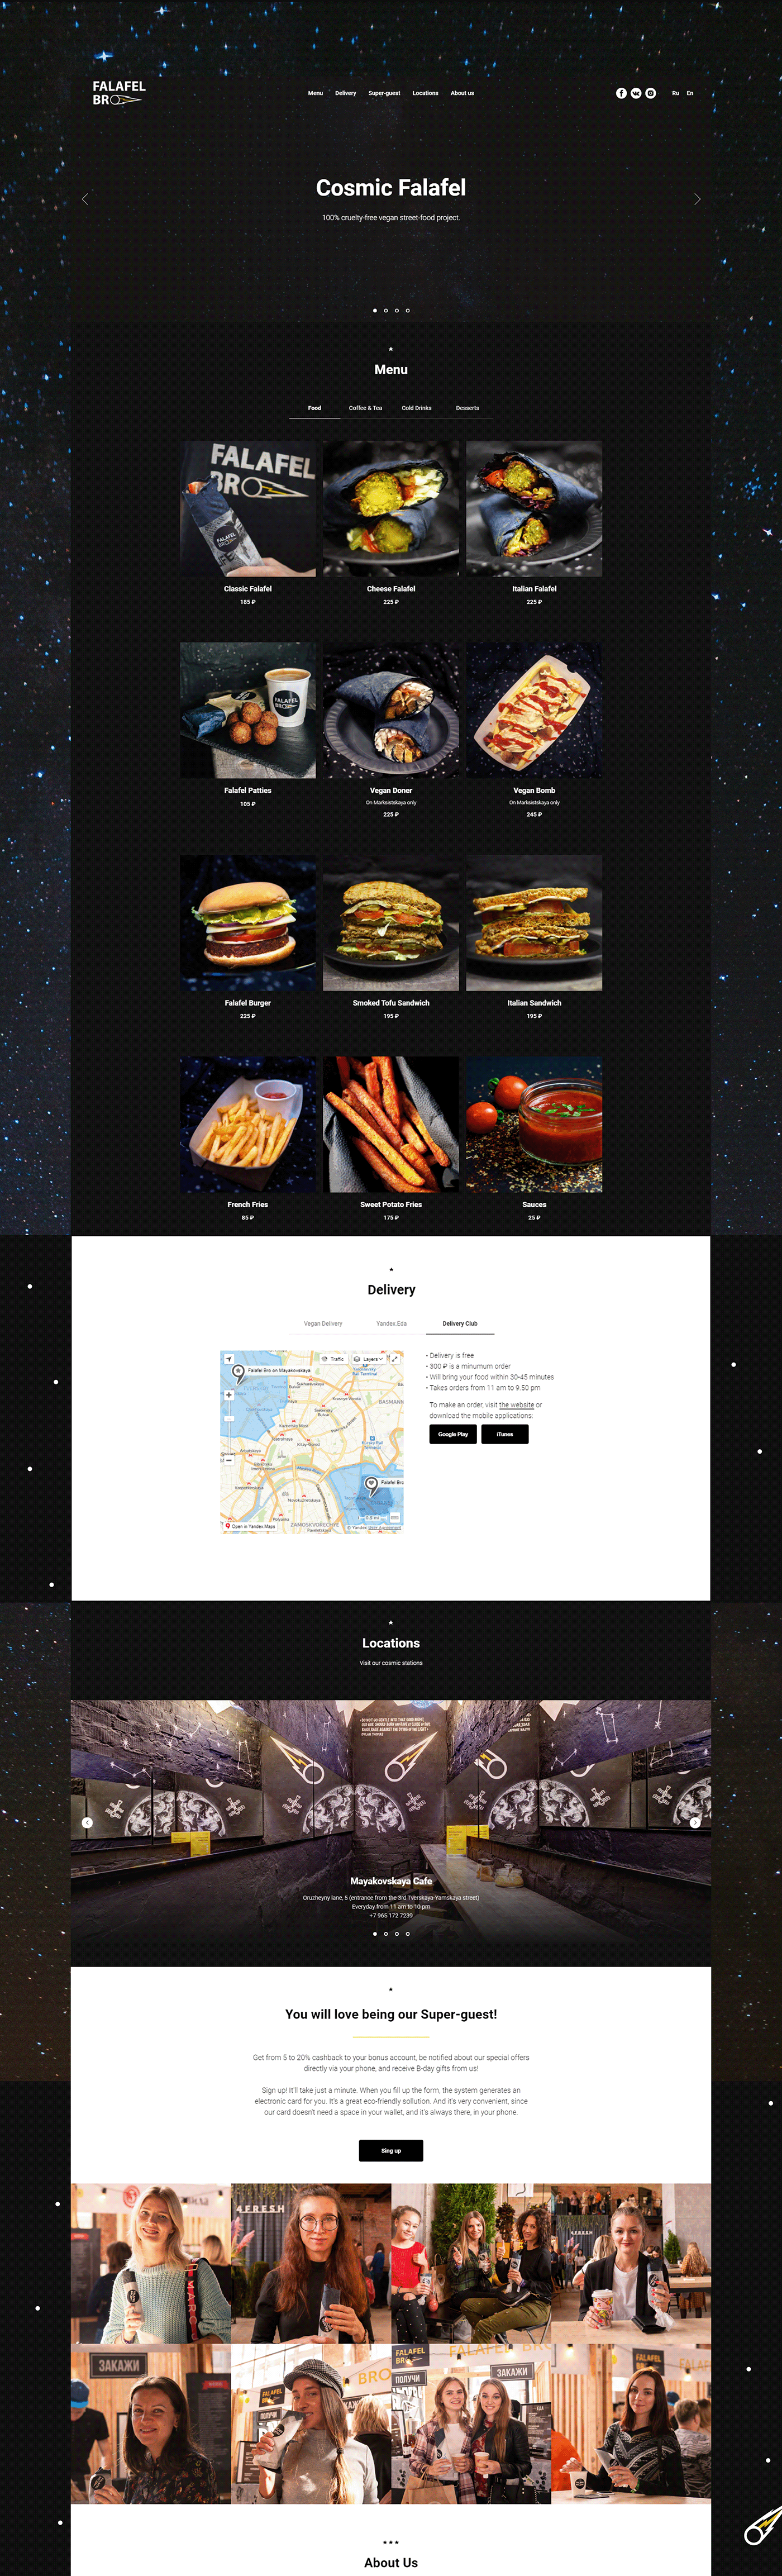 site Website tilda vegan Street Food Webdesign graphic design  Moscow Russia falafel bro